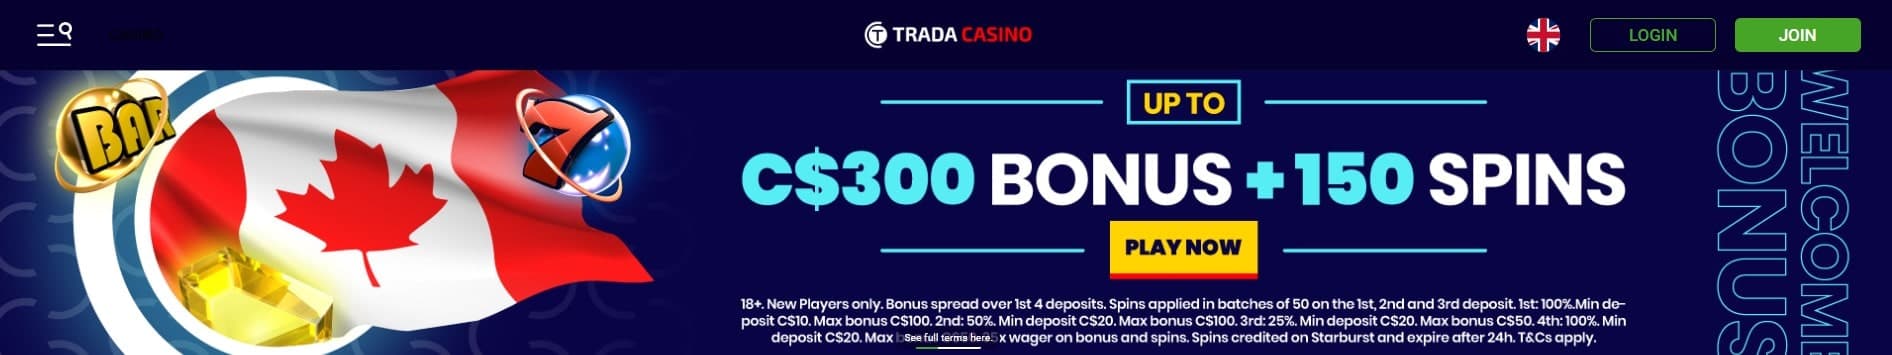 trada casino welcome bonus